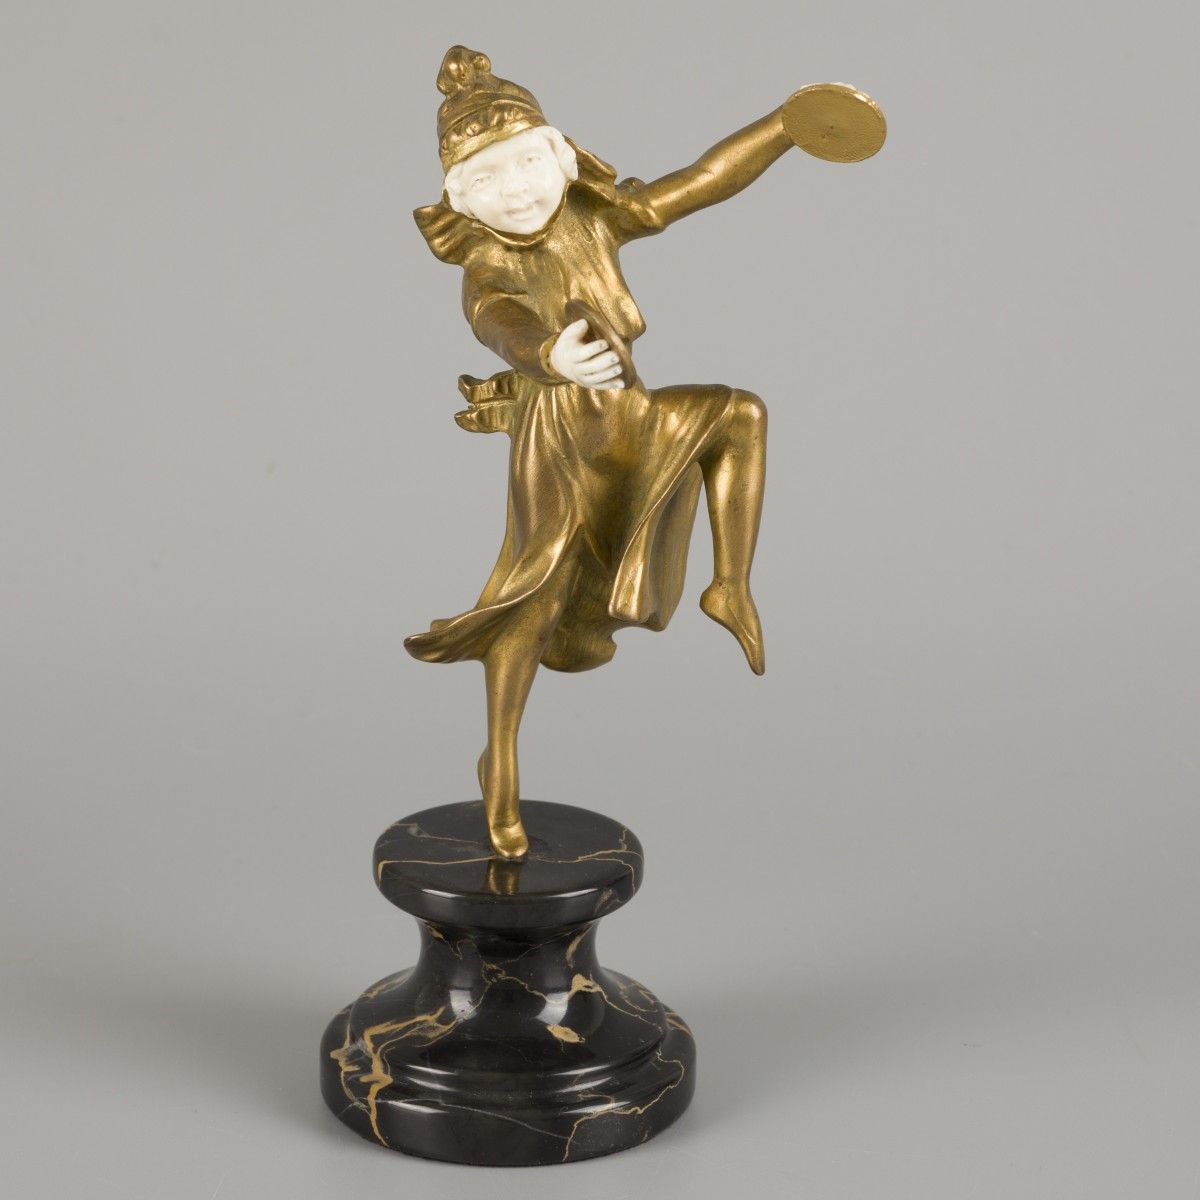 Affortunato Gory (XIX-XX), a bronze 'chryselephantine' sculpture depicting a dan&hellip;